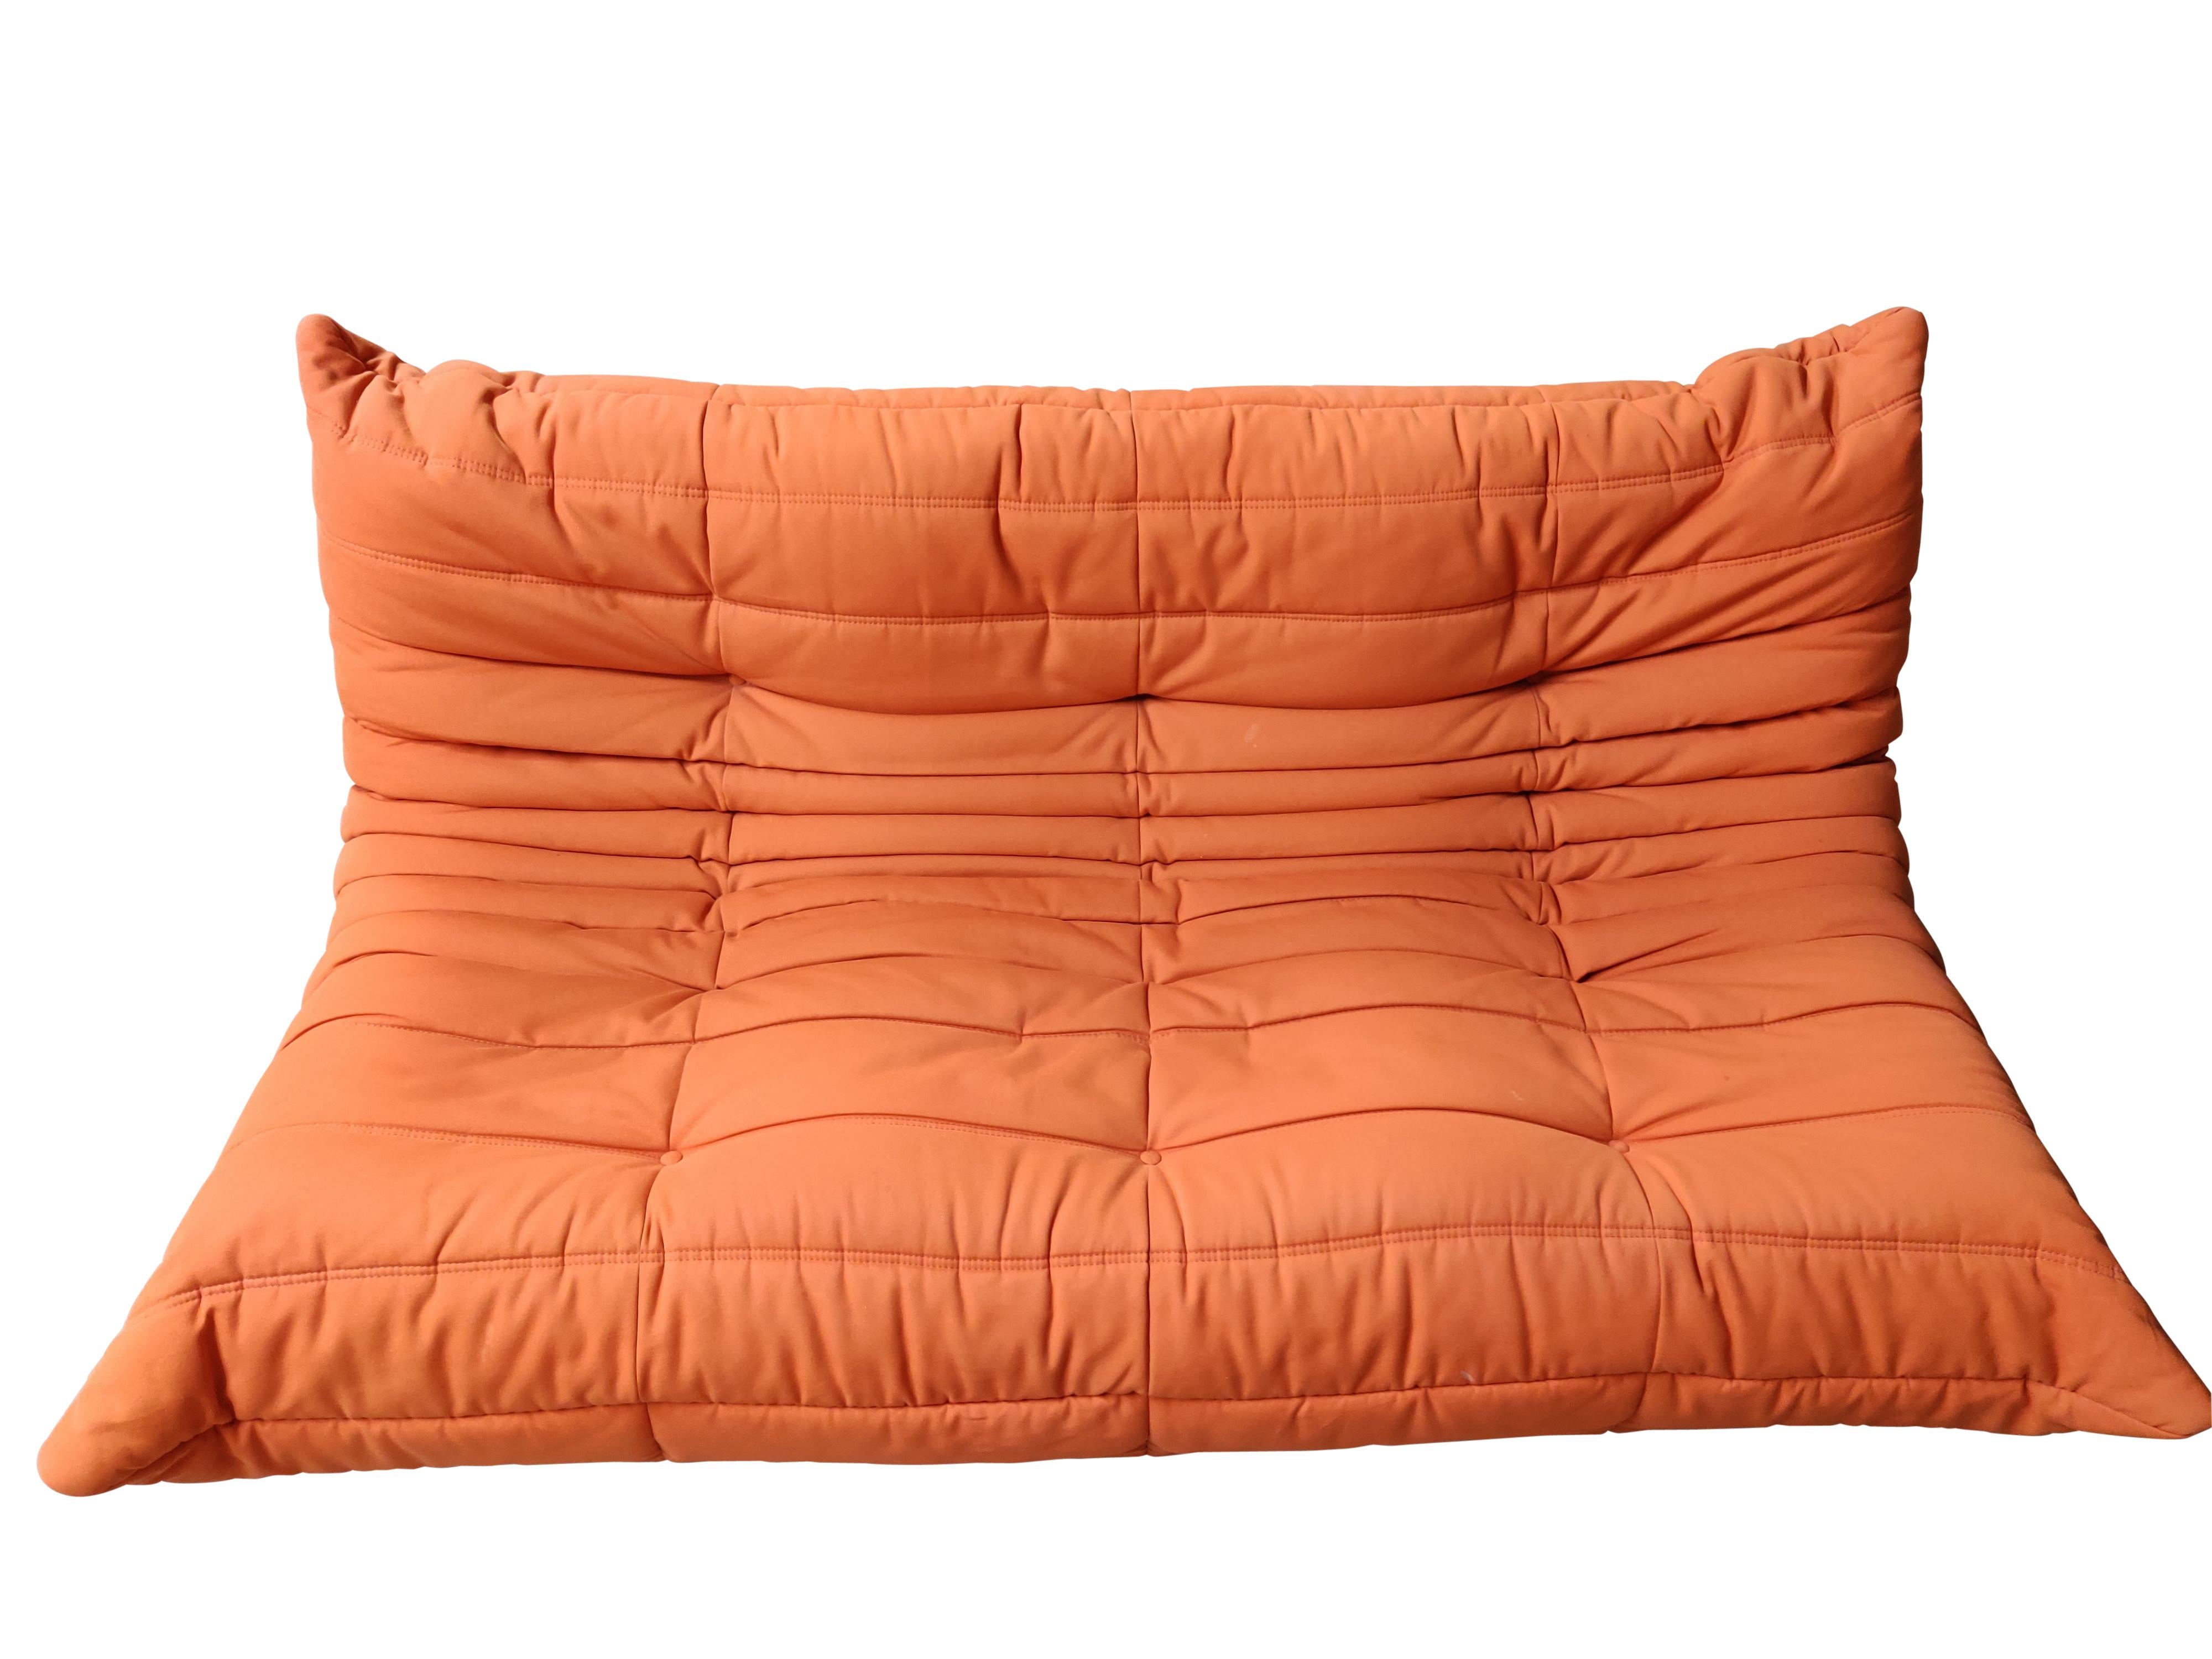 Modular 3-Piece Orange Sofa by Michel Ducaroy for Ligne Roset 2